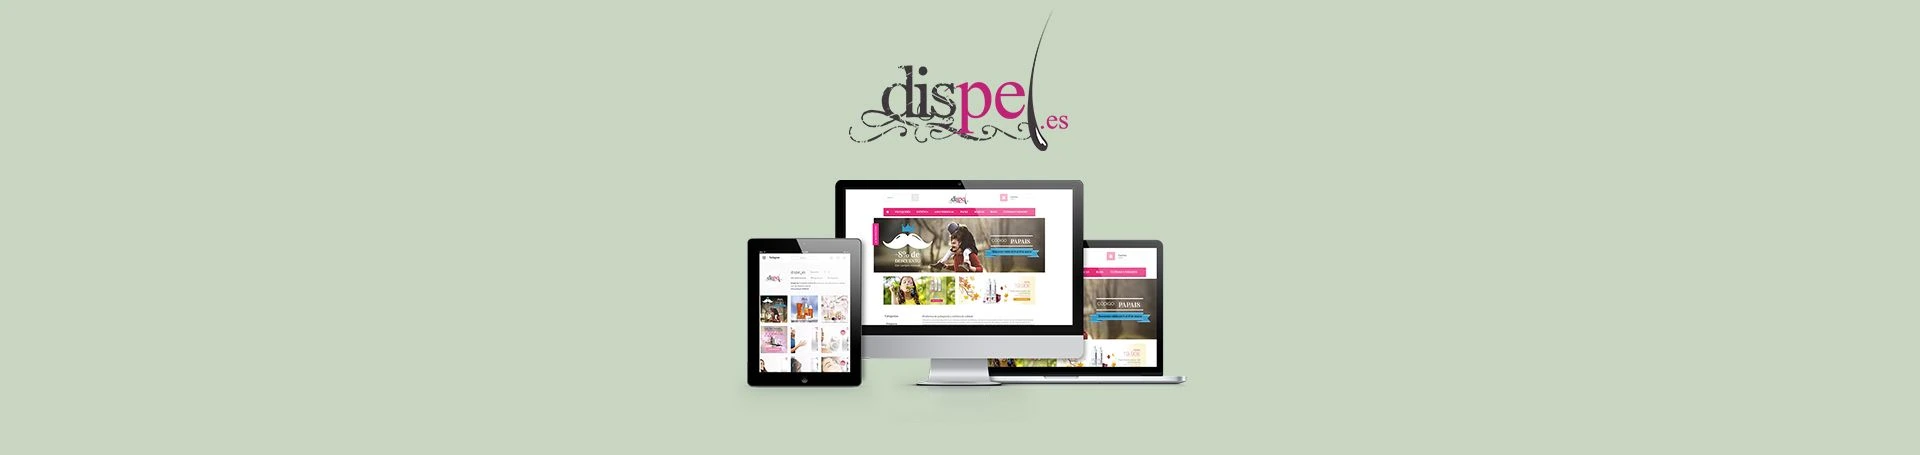 Dispel, nuevo cliente Marketing Outsourcing de Lifting Group Valencia